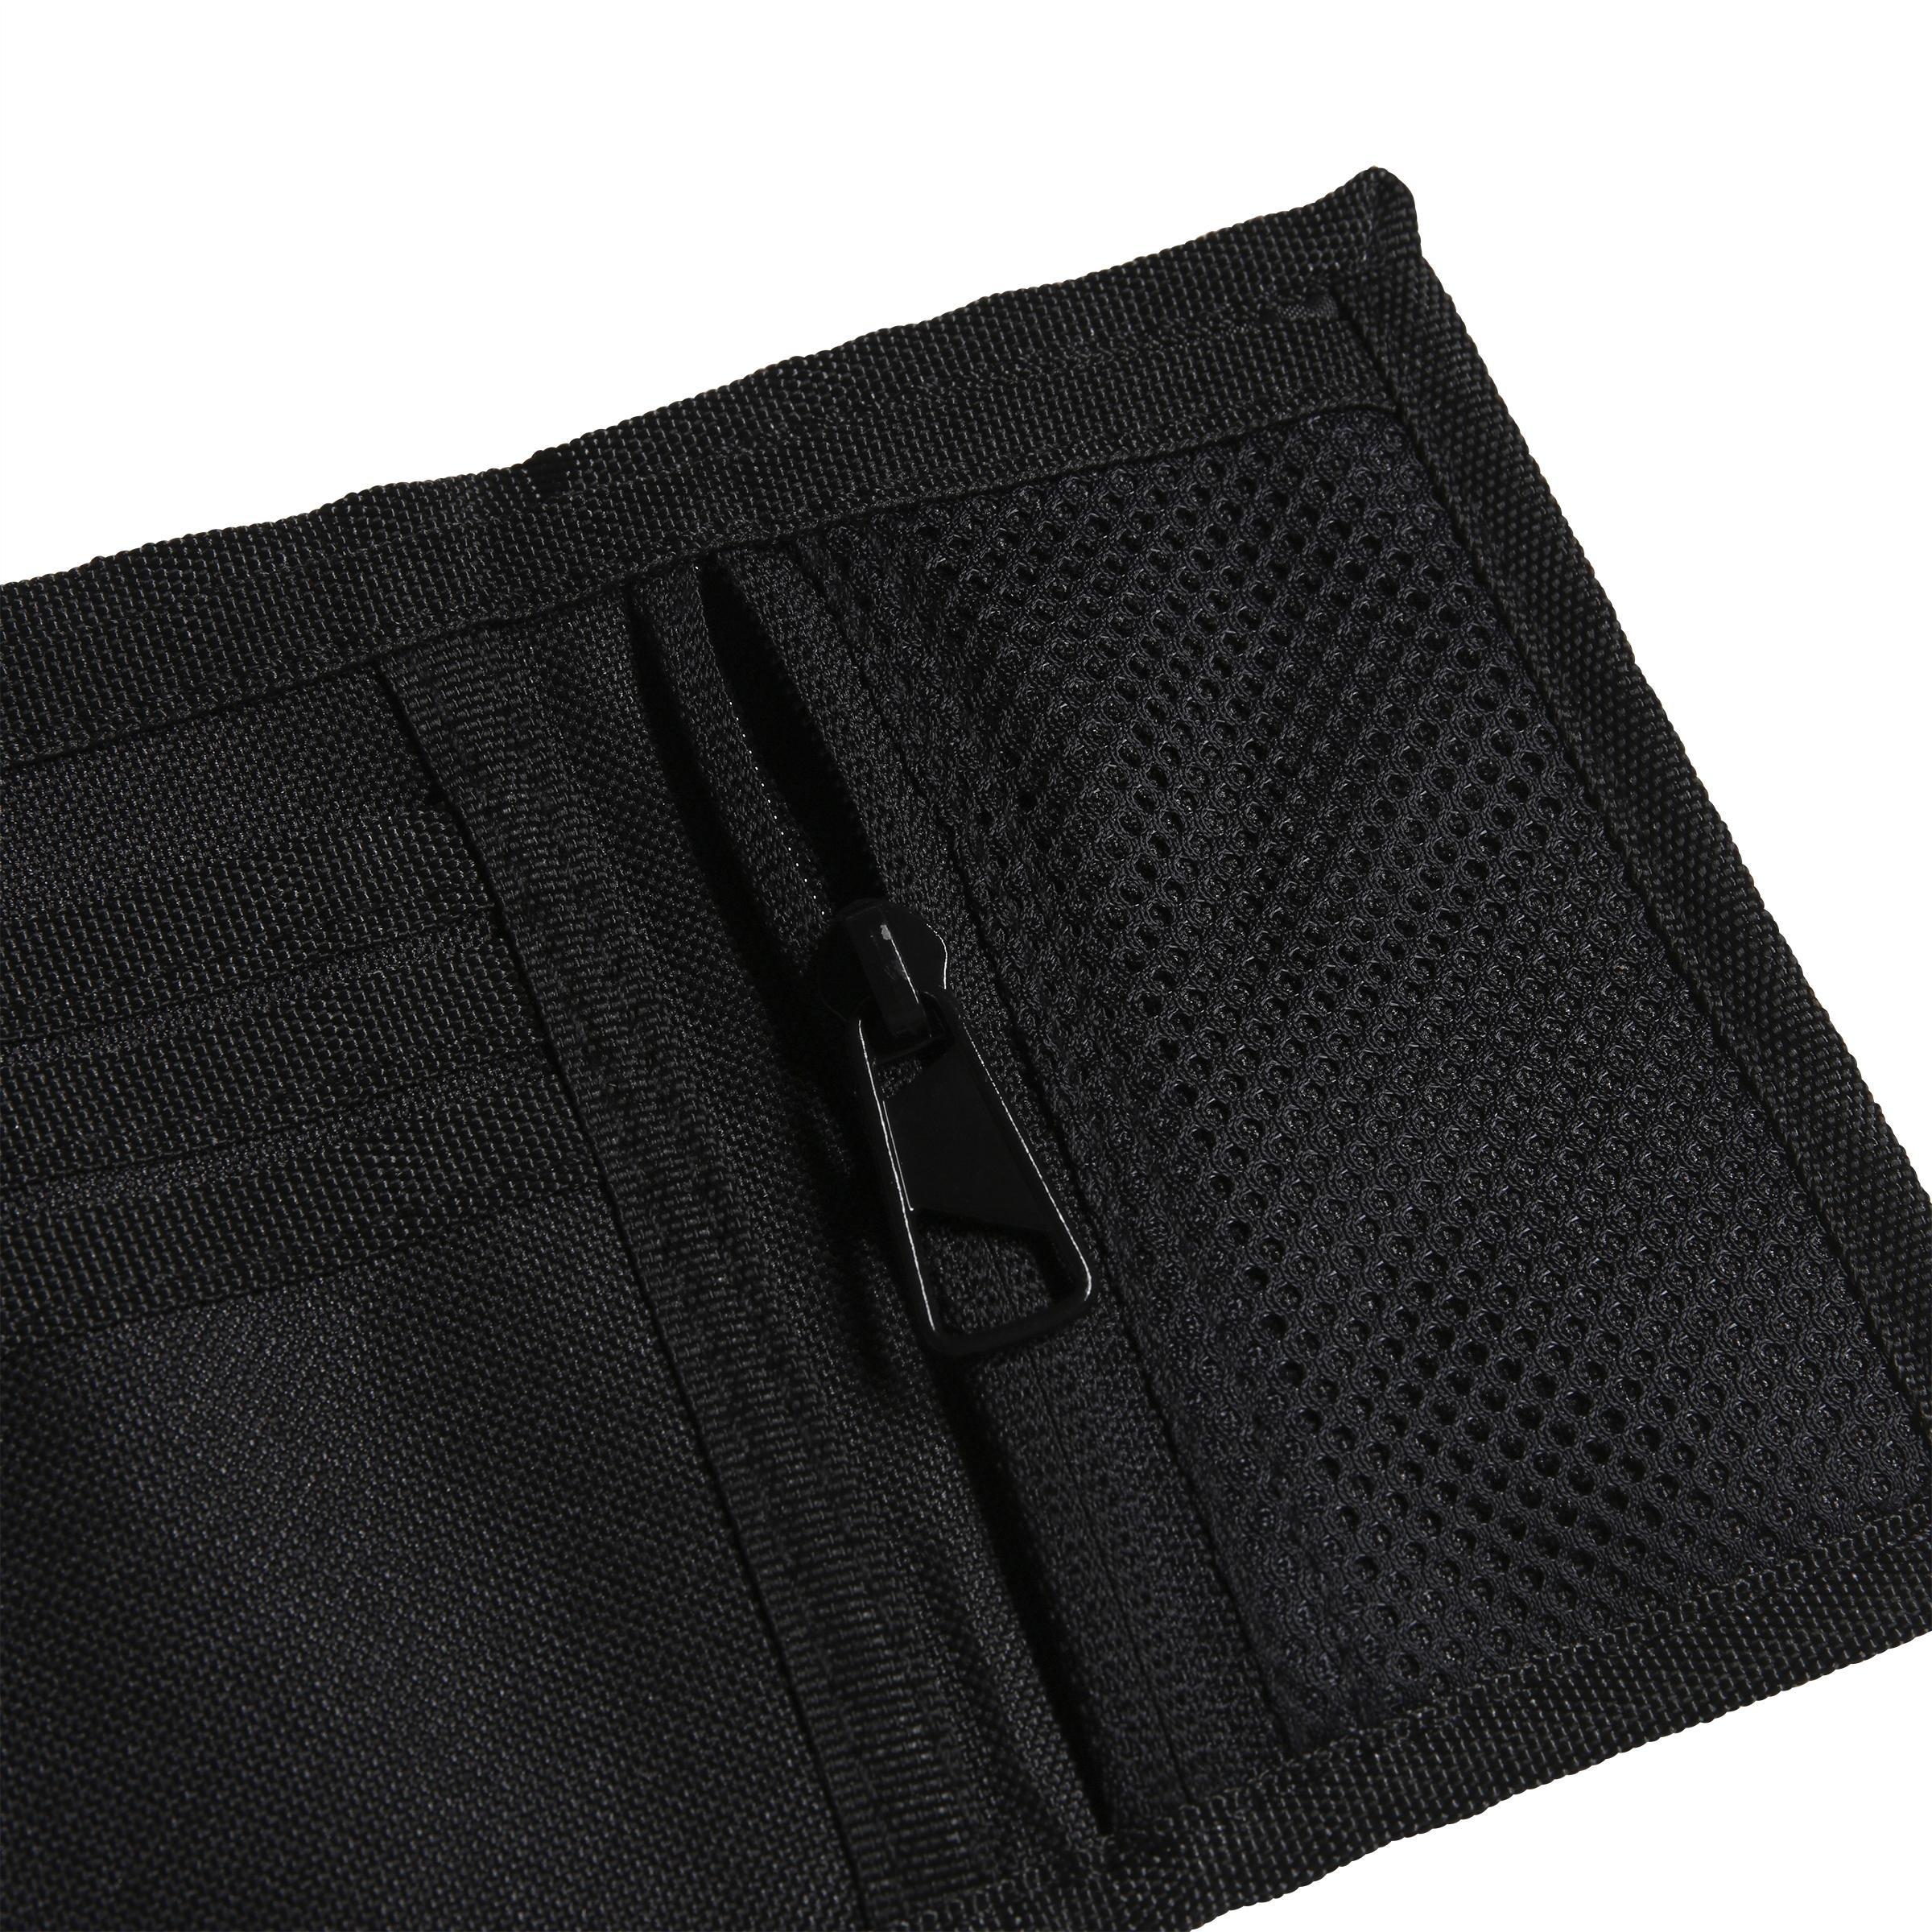 adidas - Unisex Essentials Training Wallet, Black